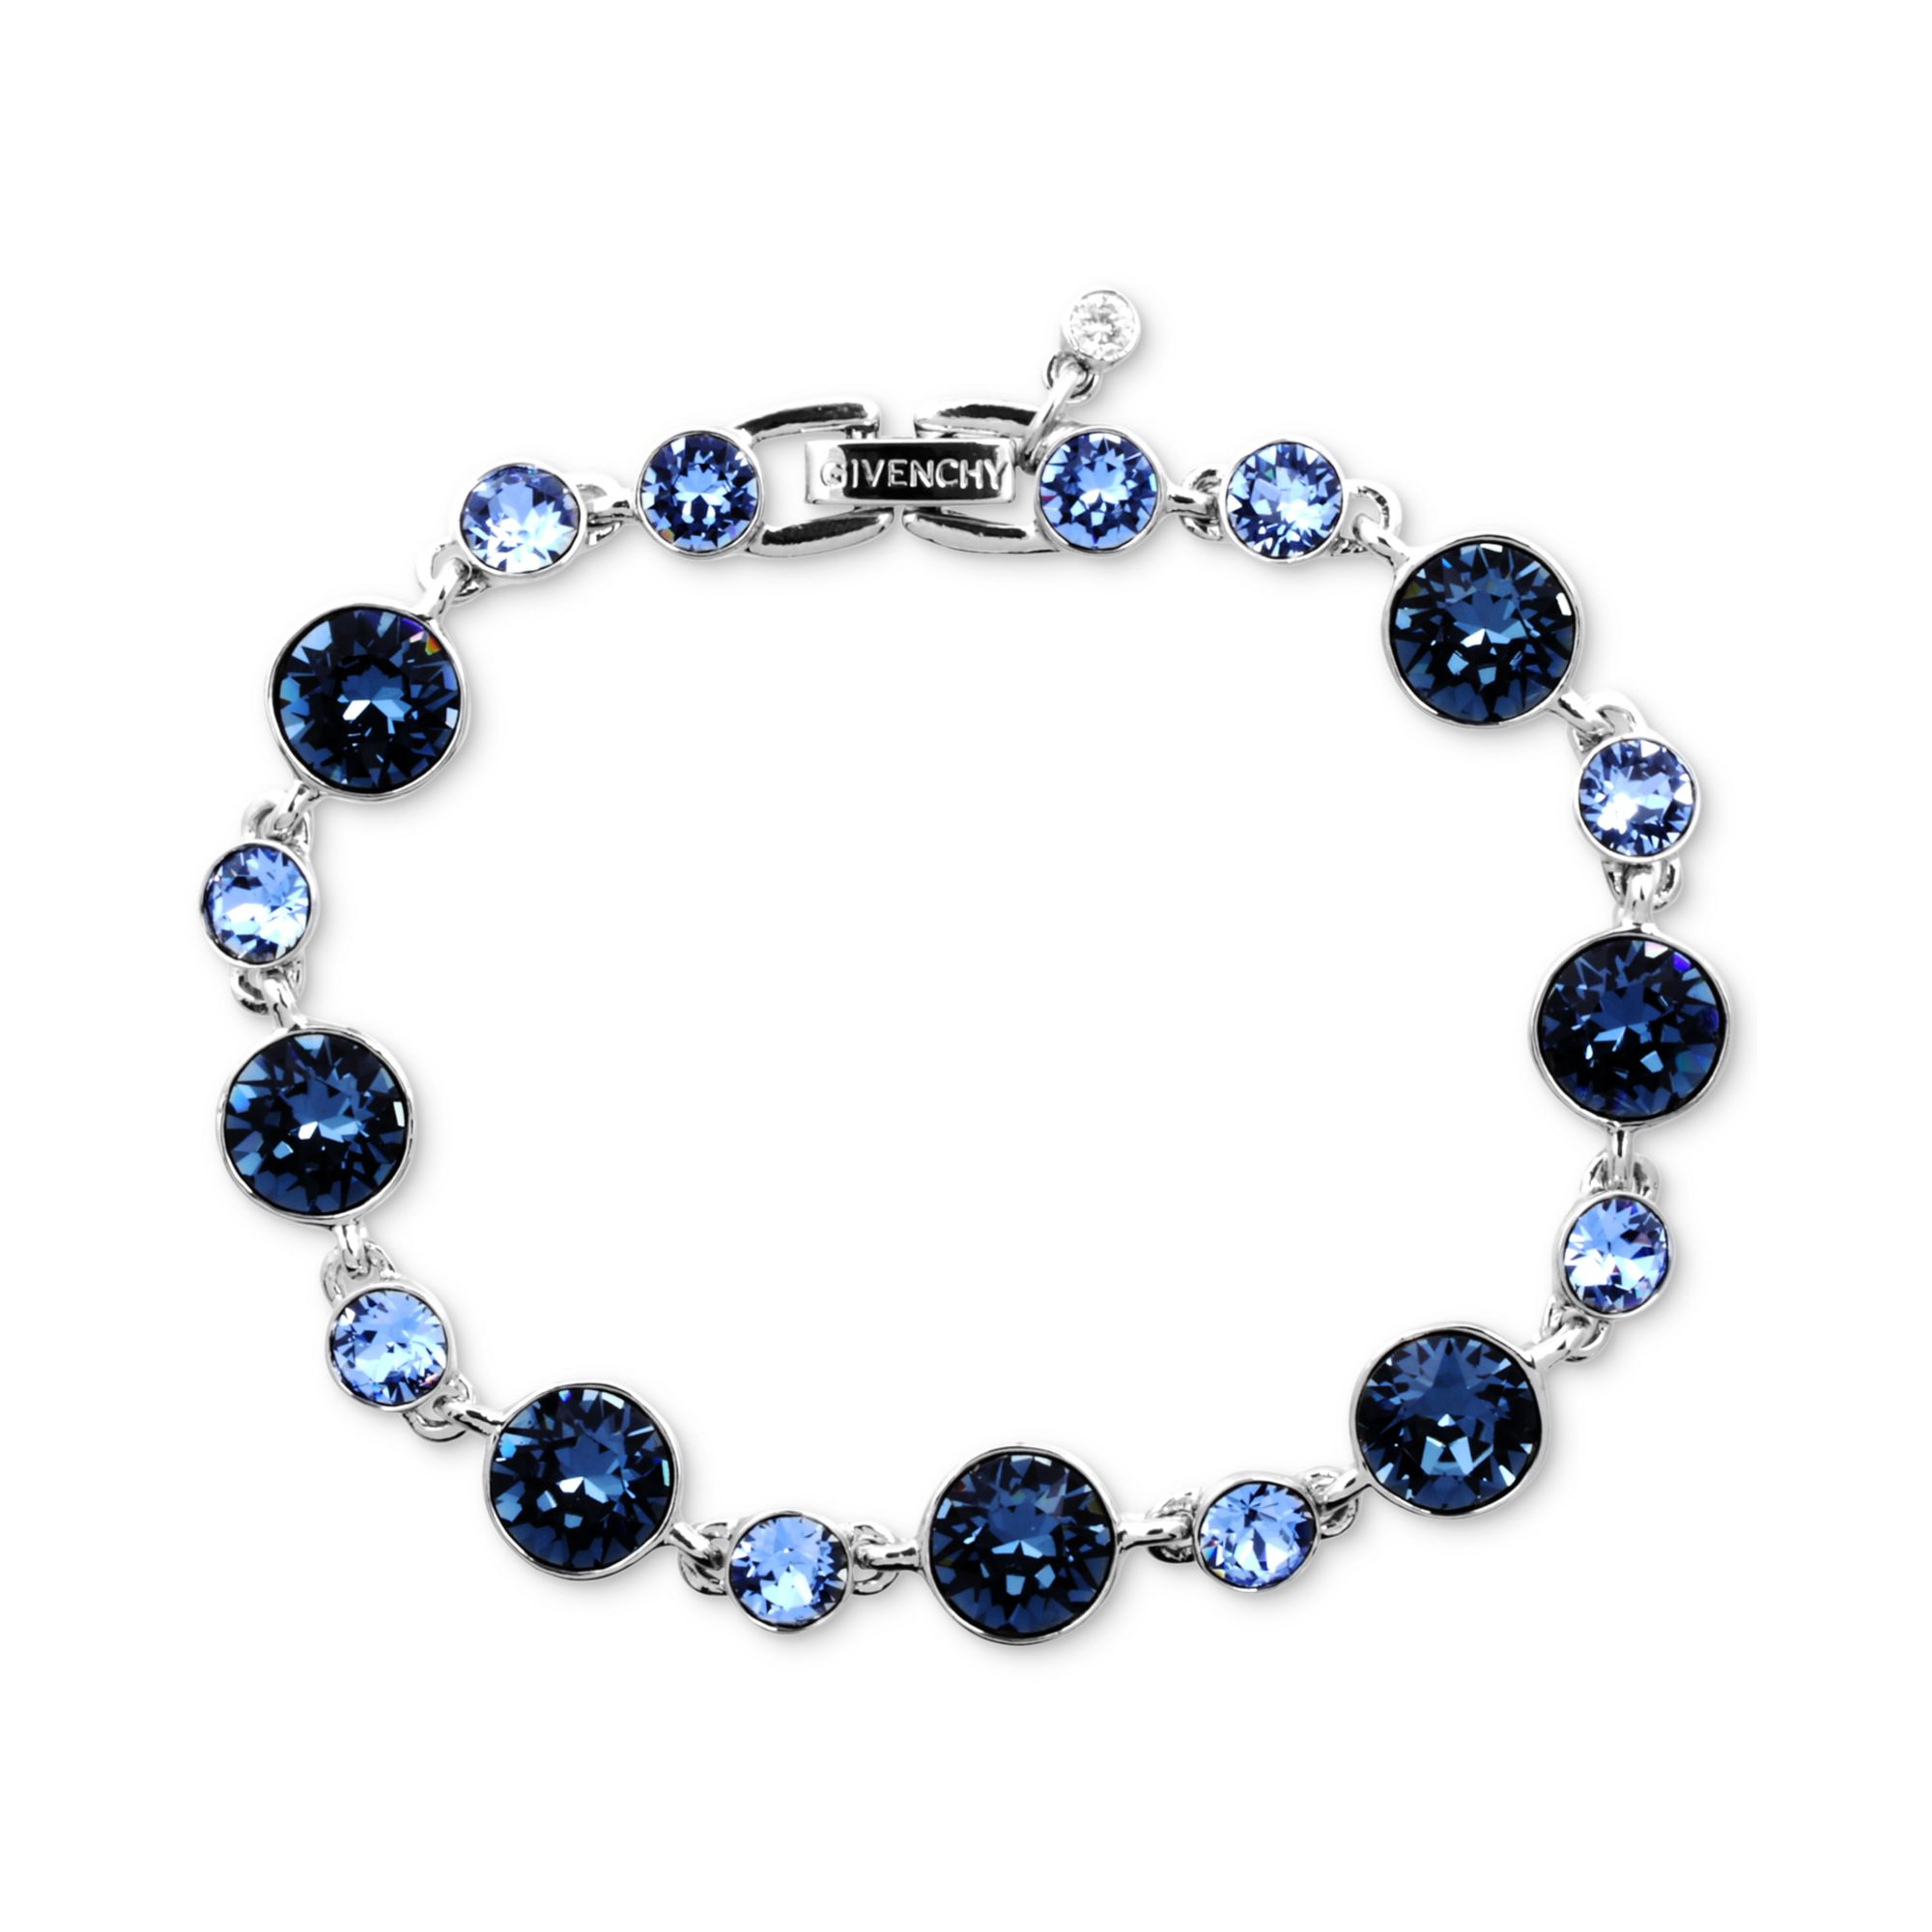 Lyst - Givenchy Silvertone Swarovski Denim Blue And Light Sapphire ...